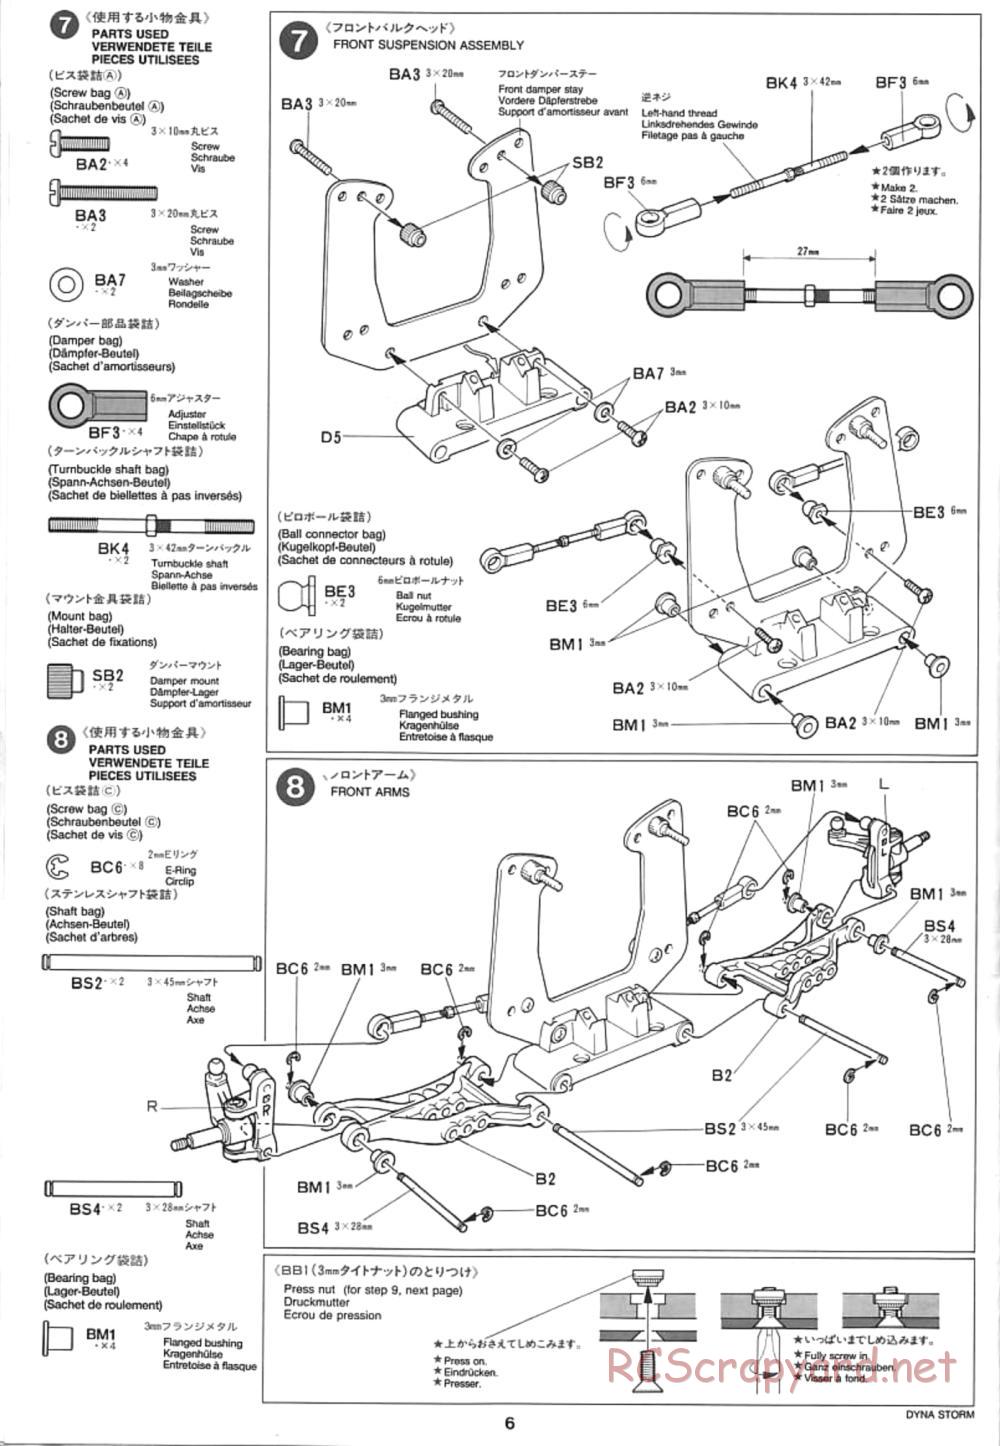 Tamiya - Dyna Storm Chassis - Manual - Page 6